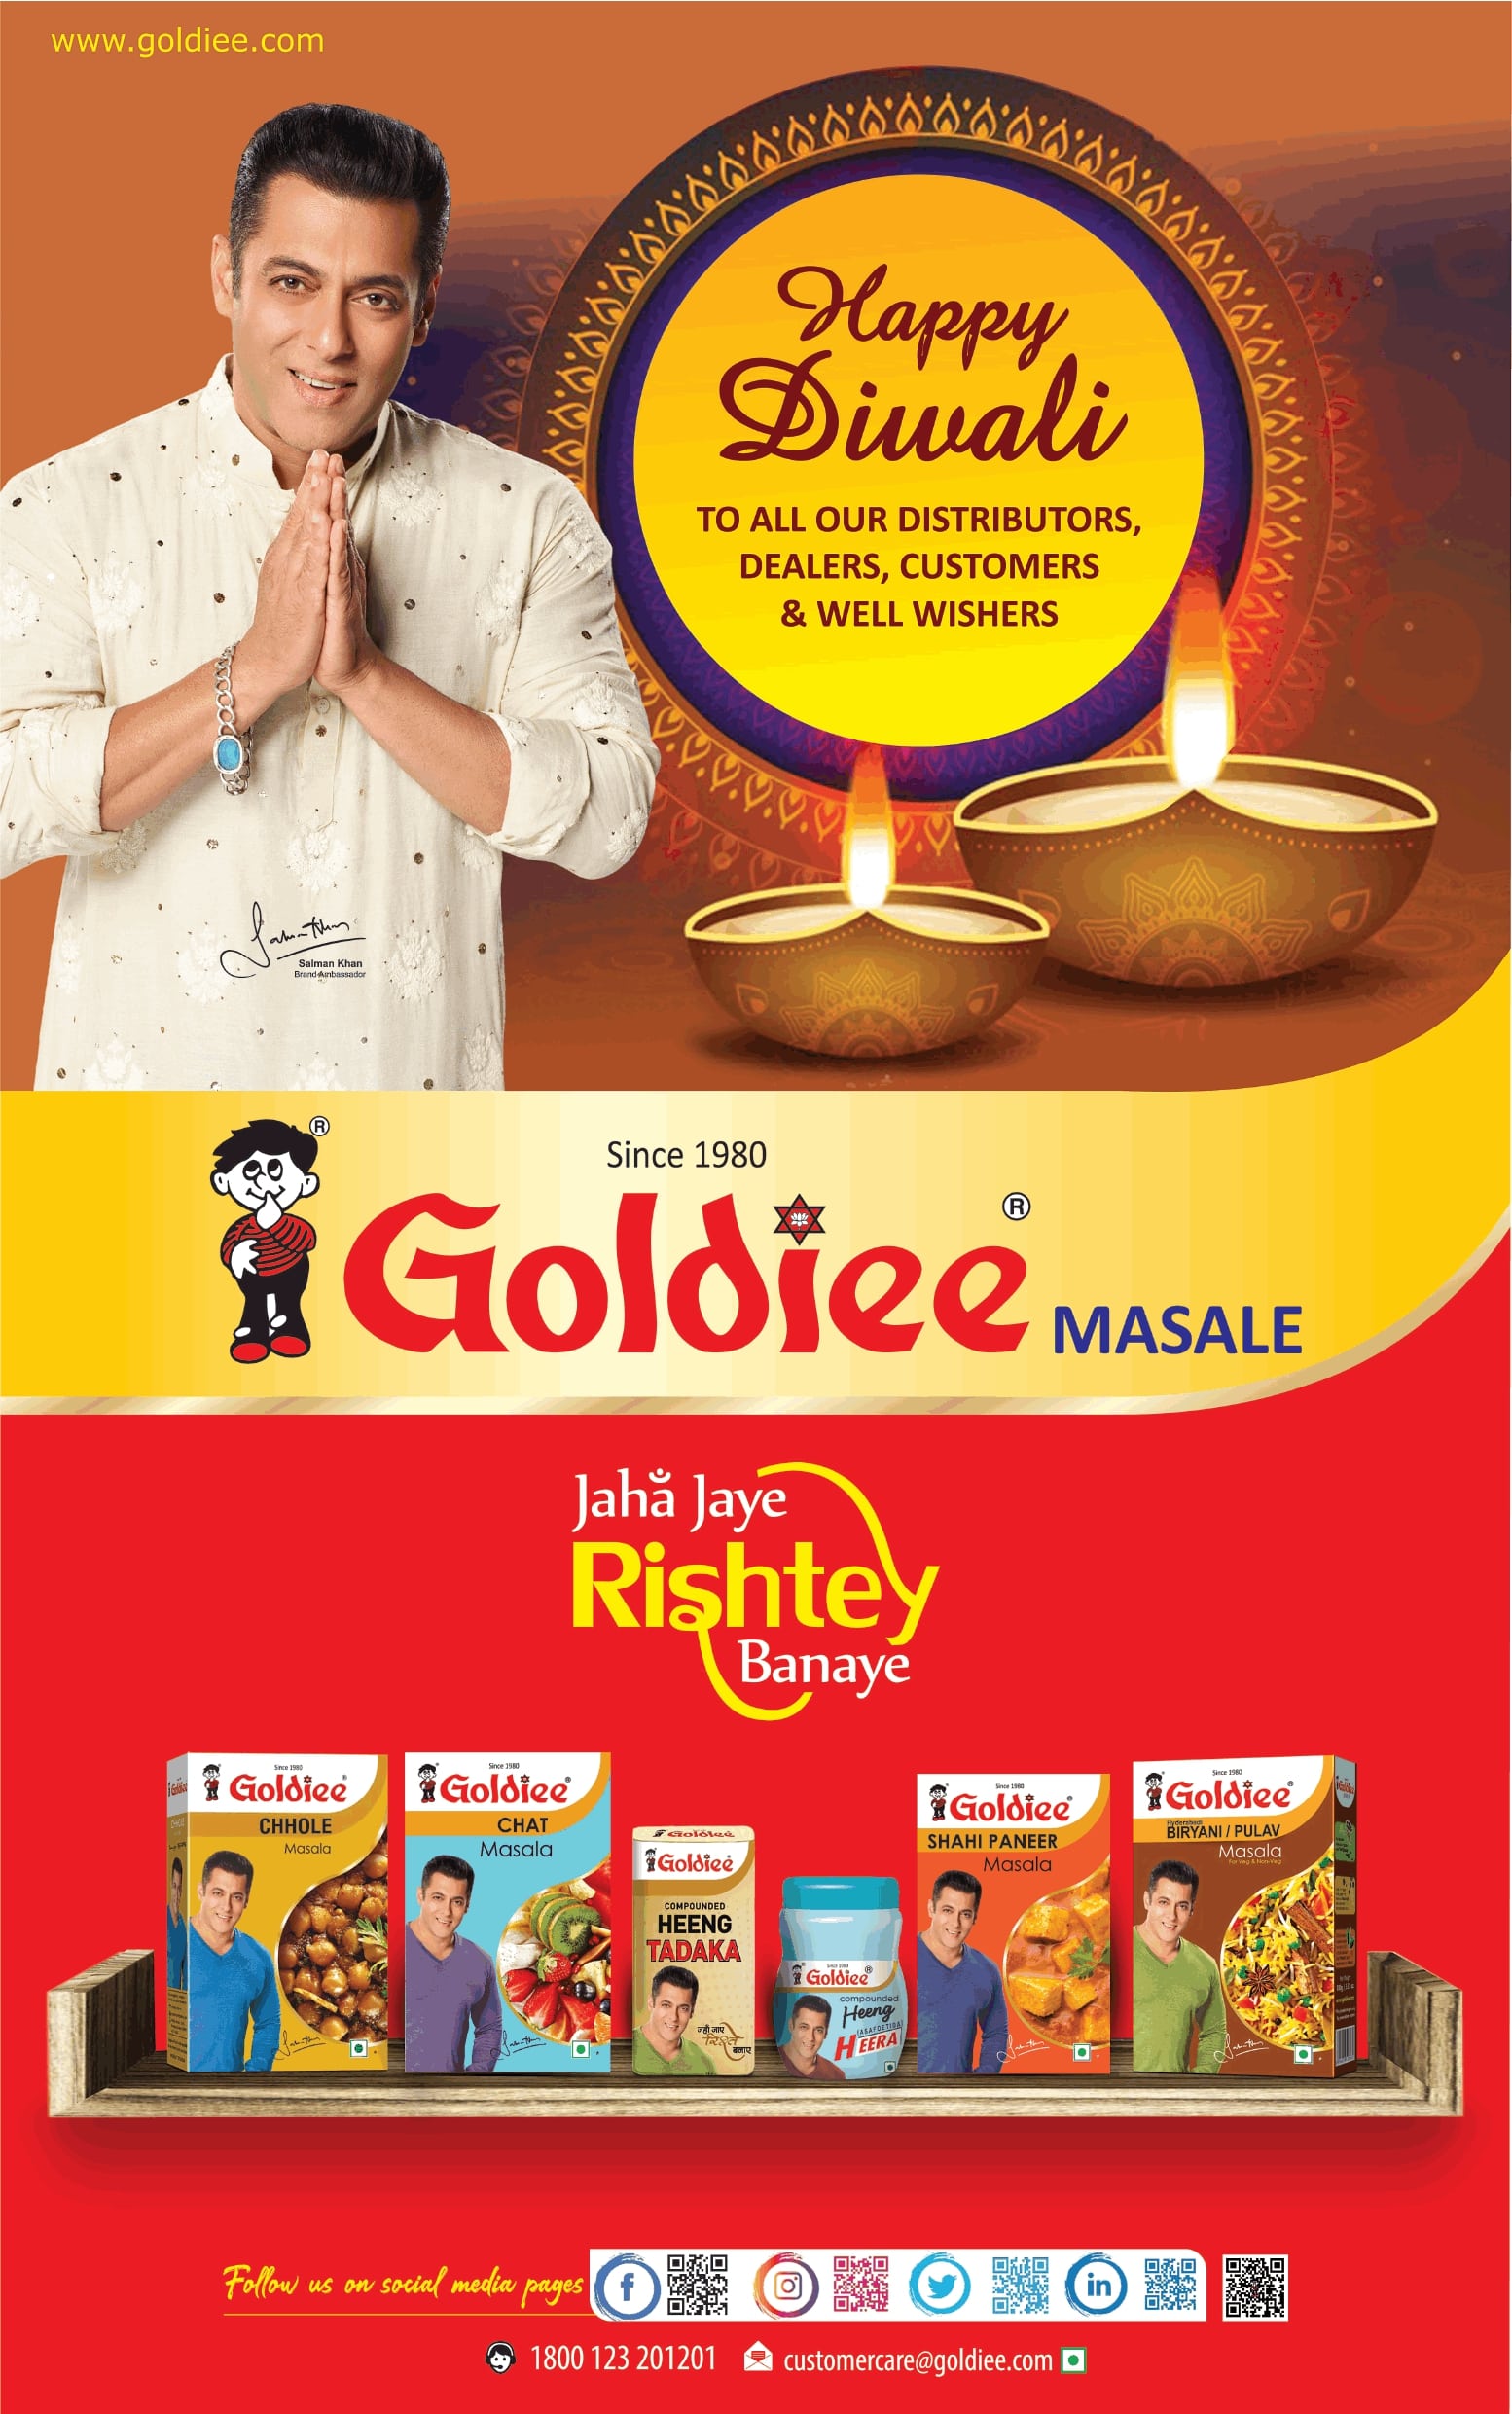 goldiee-masale-jaha-jaye-rishtey-banaye-happy-diwali-ad-toi-jaipur-13-11-2020